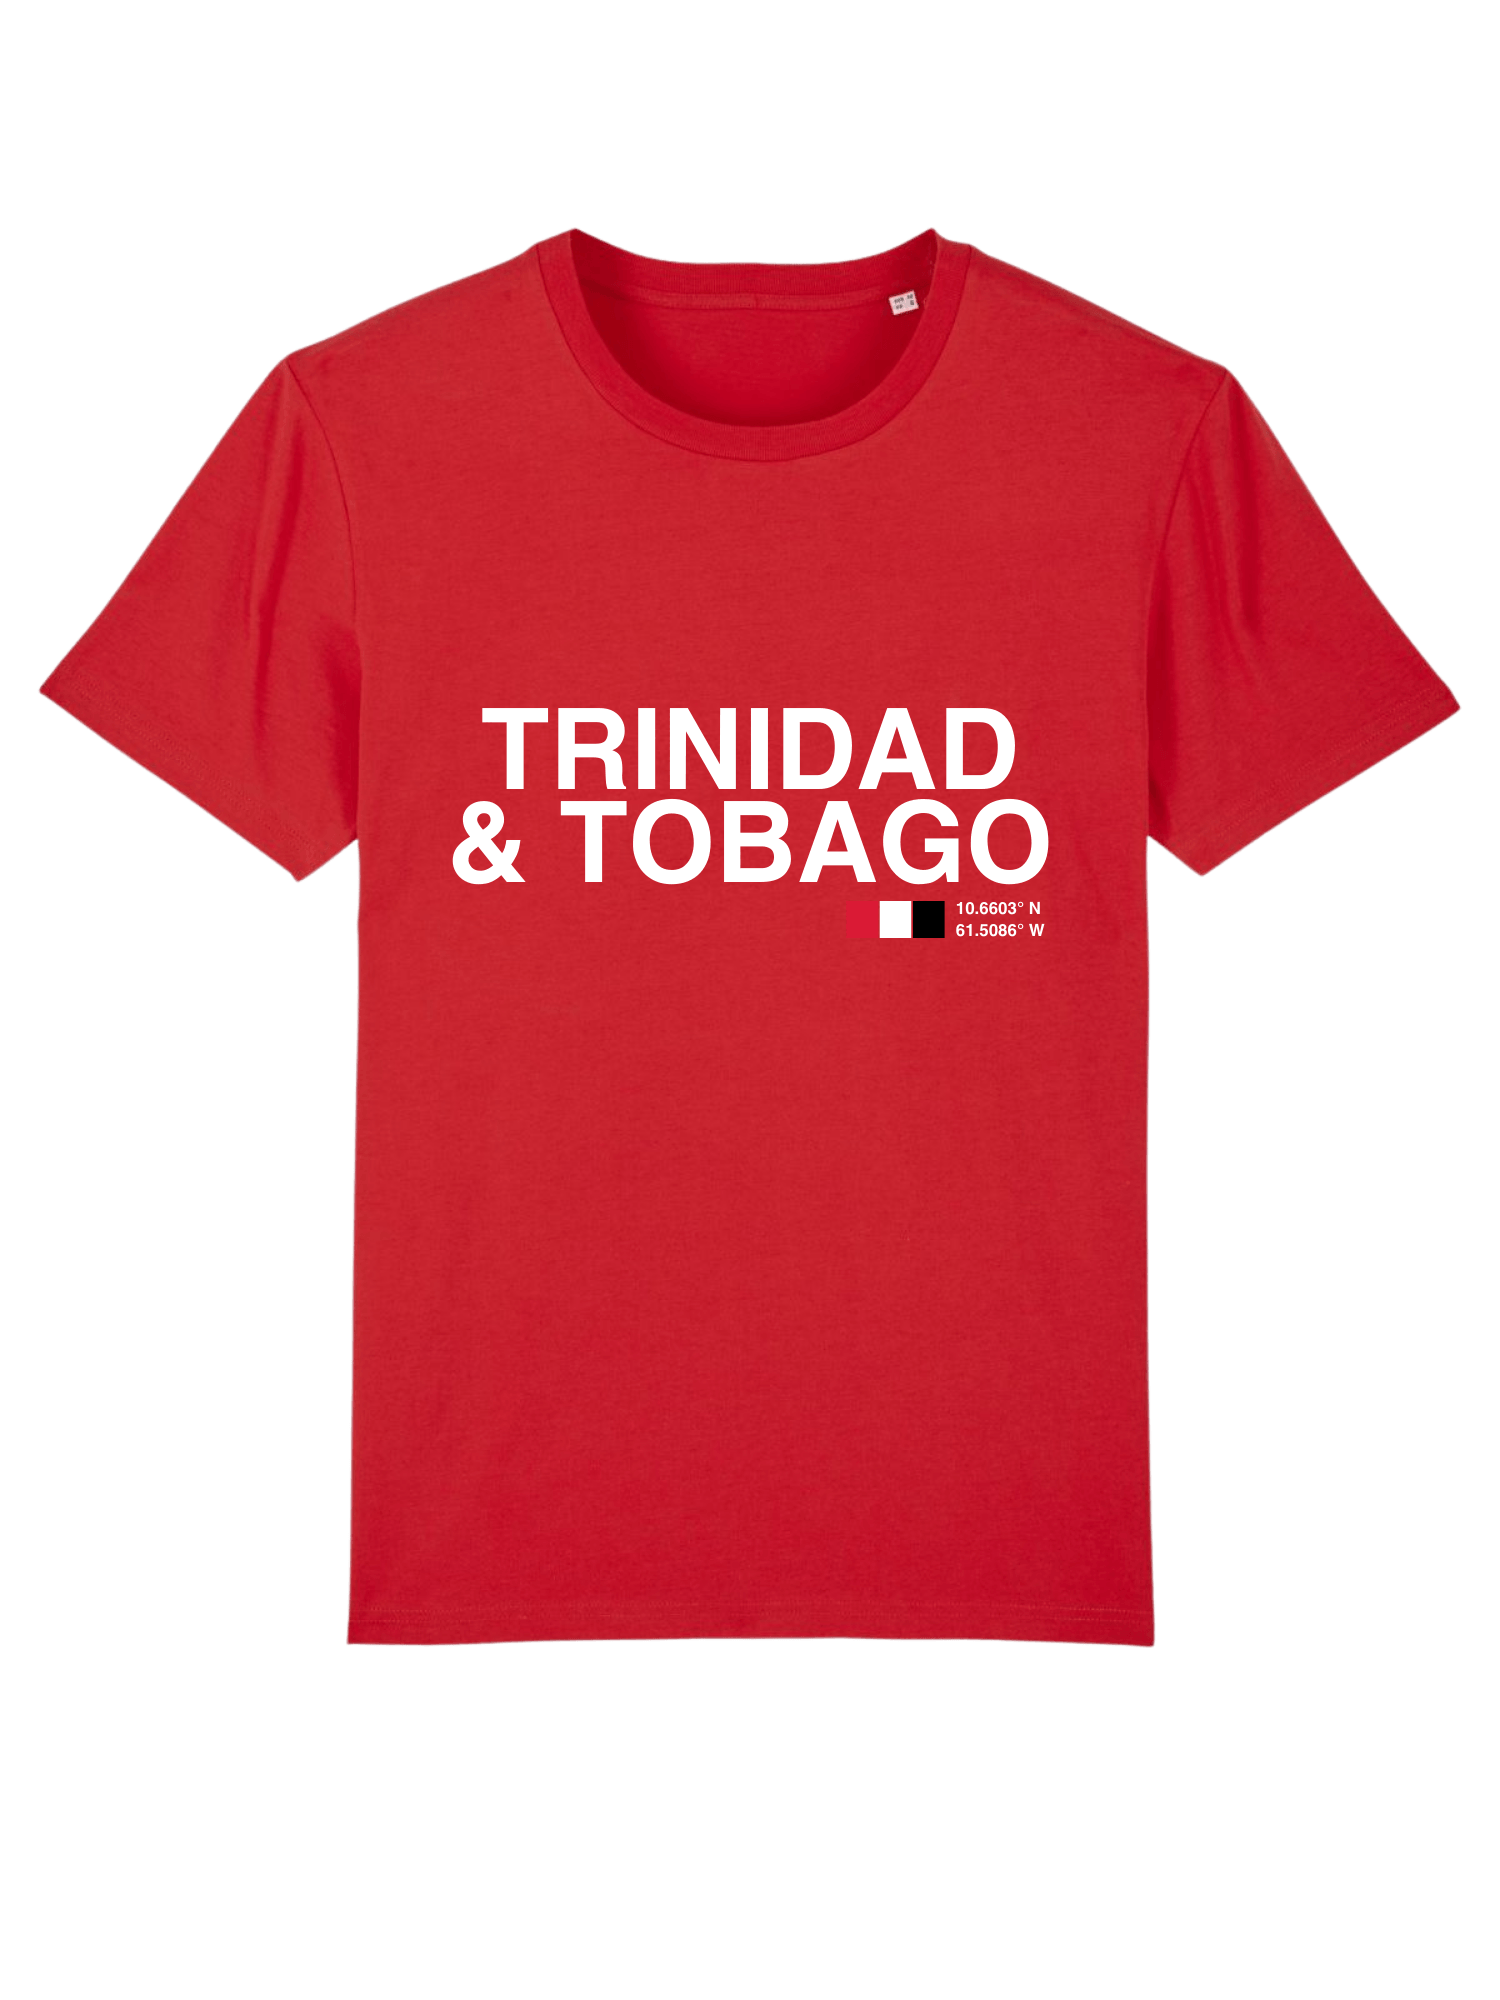 TRINIDAD & TOBAGO Print Unsex Crew Neck T-Shirt Dark Heather Grey